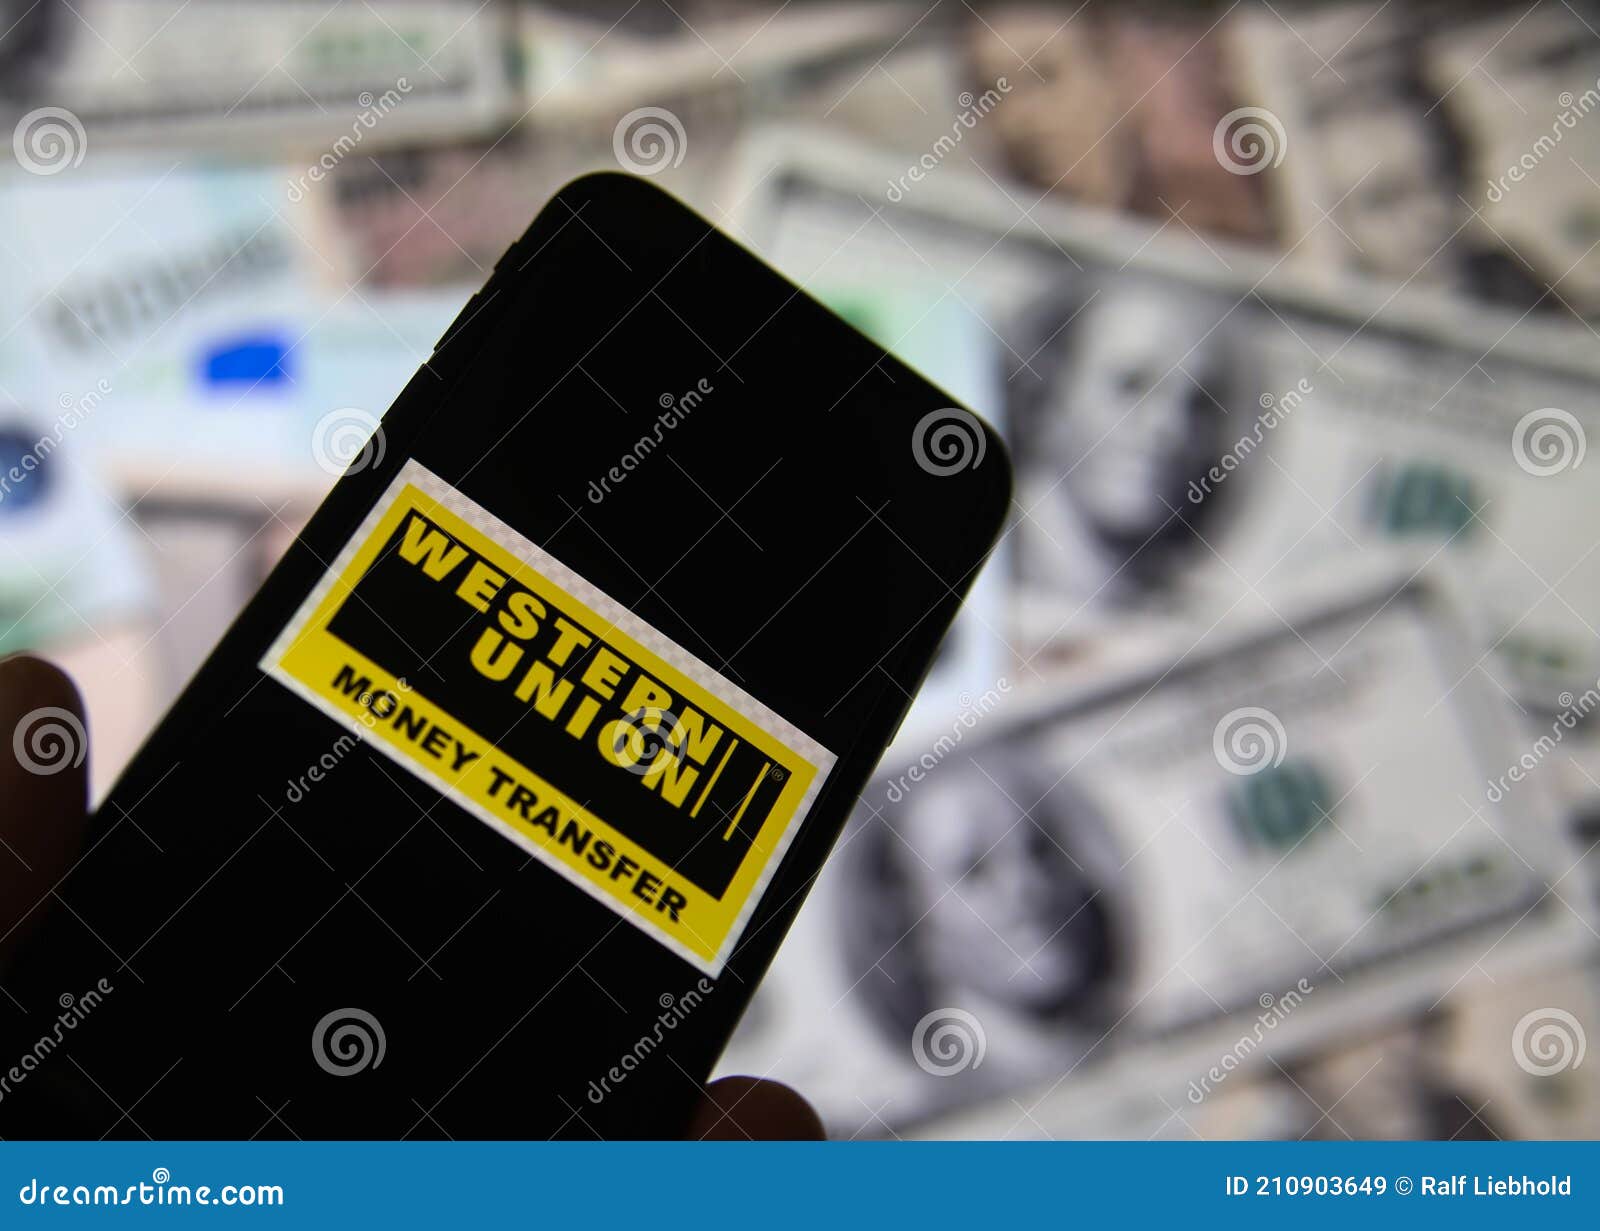 Western Union Cash Transfer Kiosk – Fixtures Close Up